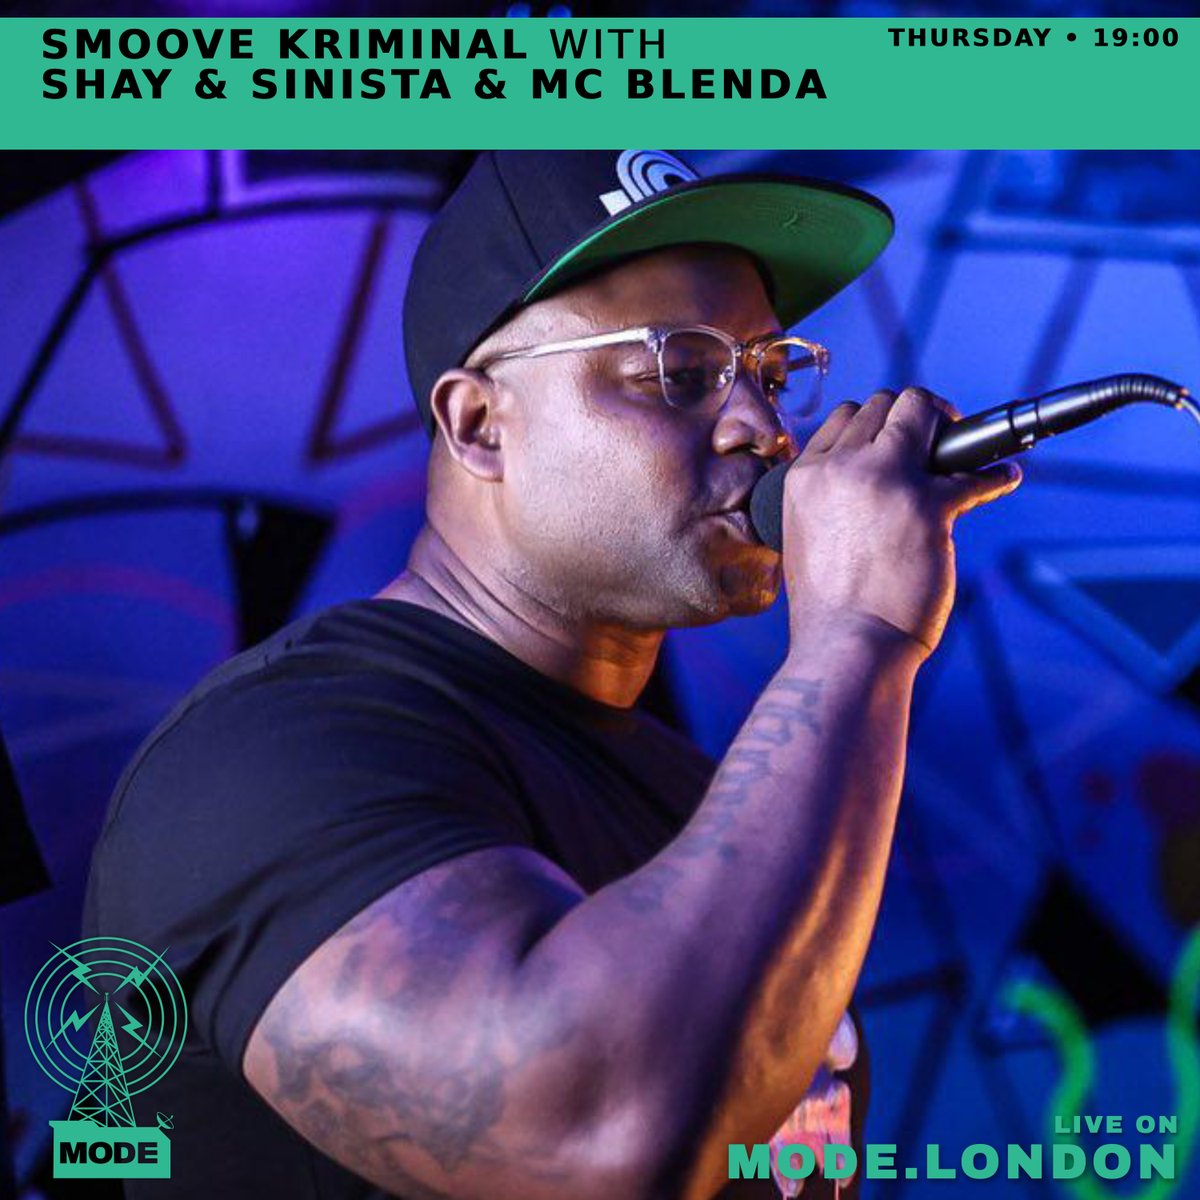 .@SmooveKriminal up next joined by @ShayAndSinista & @MCBlenda for 2 hours of UK Funky, Bass, House & UK Garage Mode.London